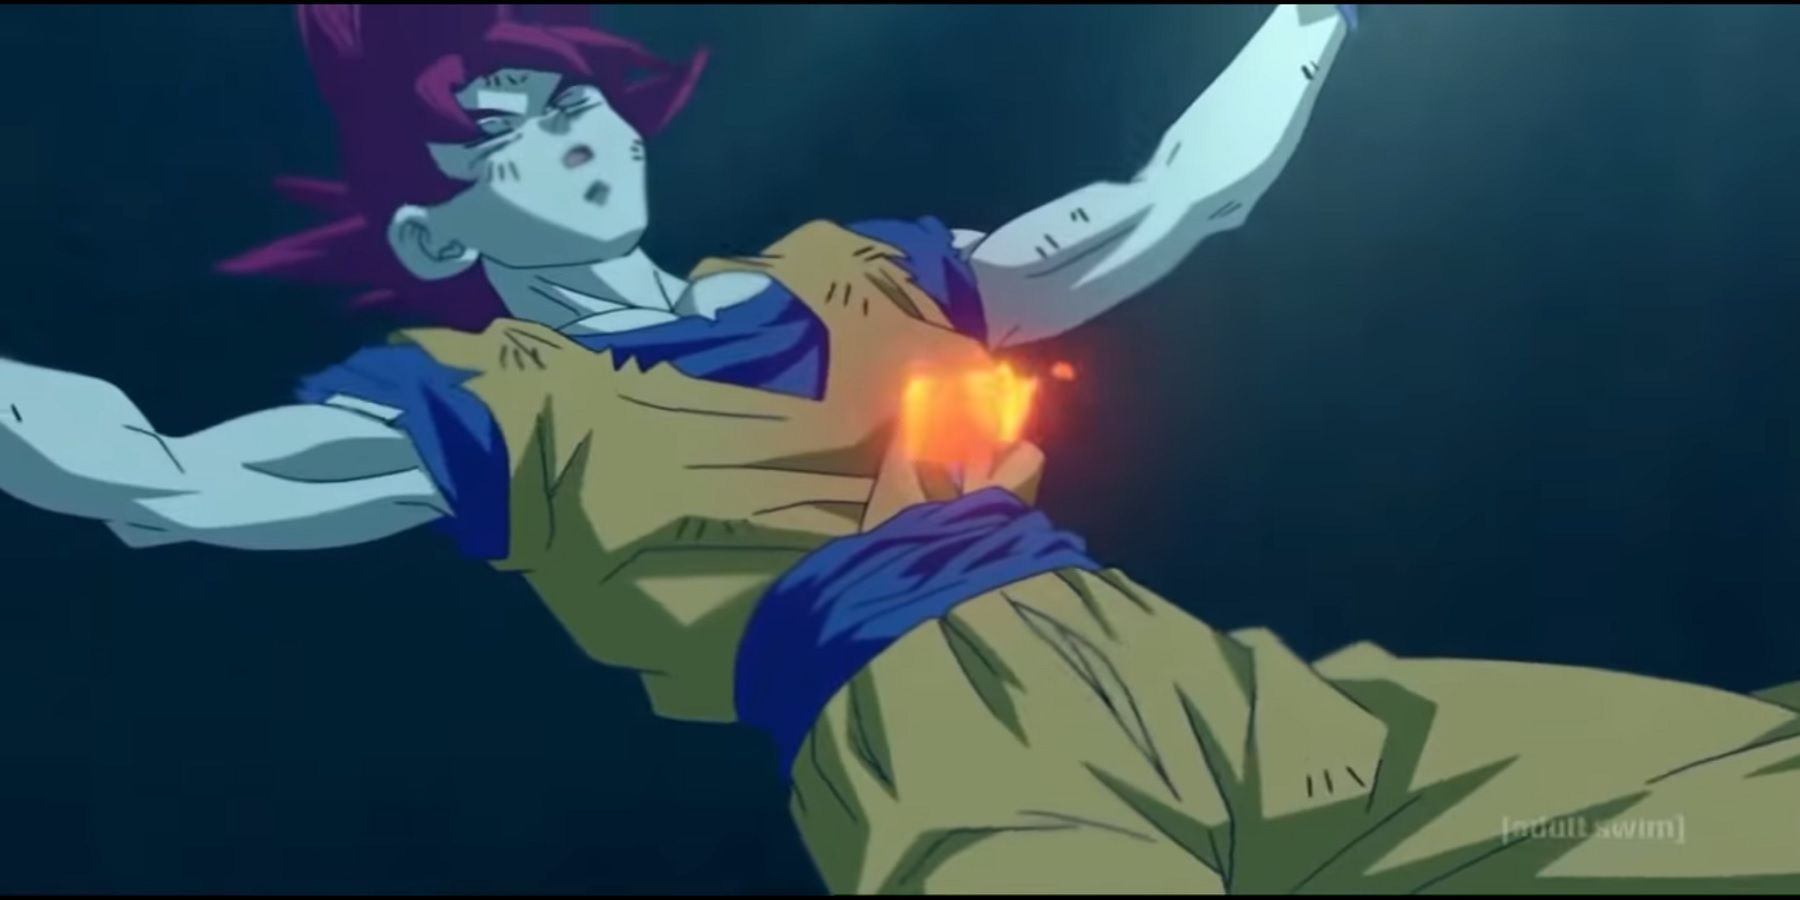 Dragon Ball's Goku in his Super Saiyan God form, channeling godly ki to regeneration.